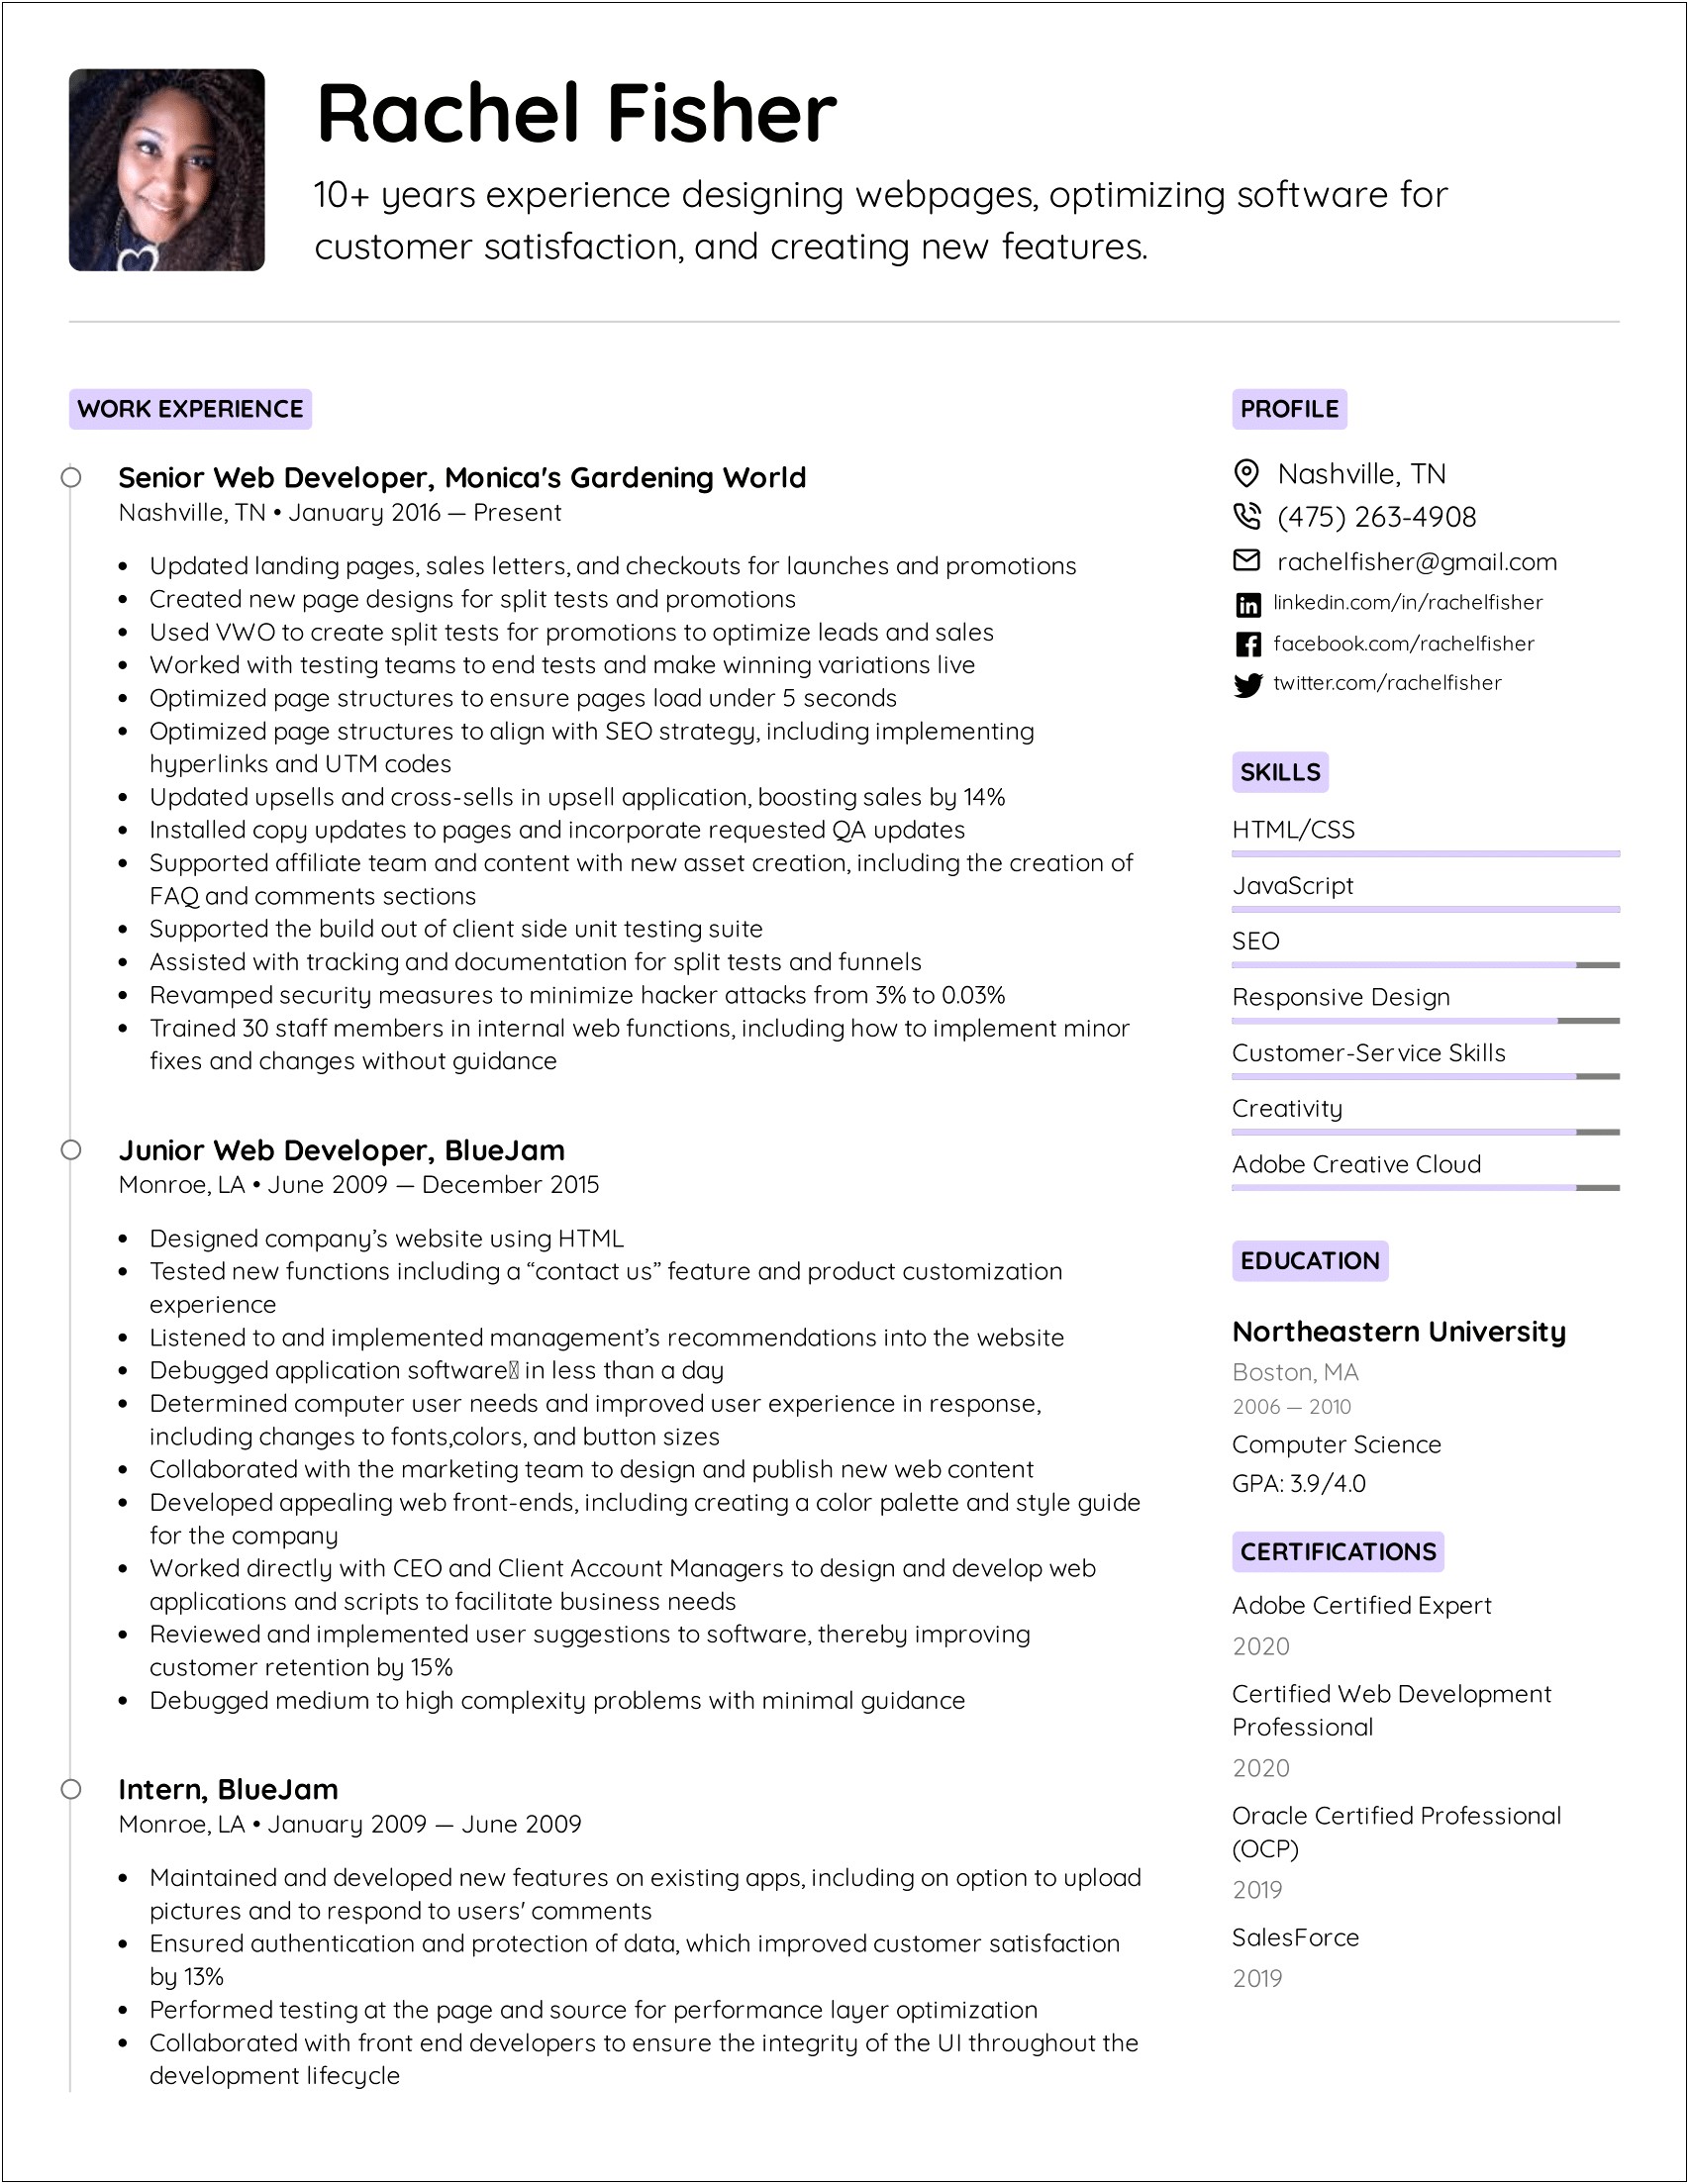 Sample Resume With Css Skills